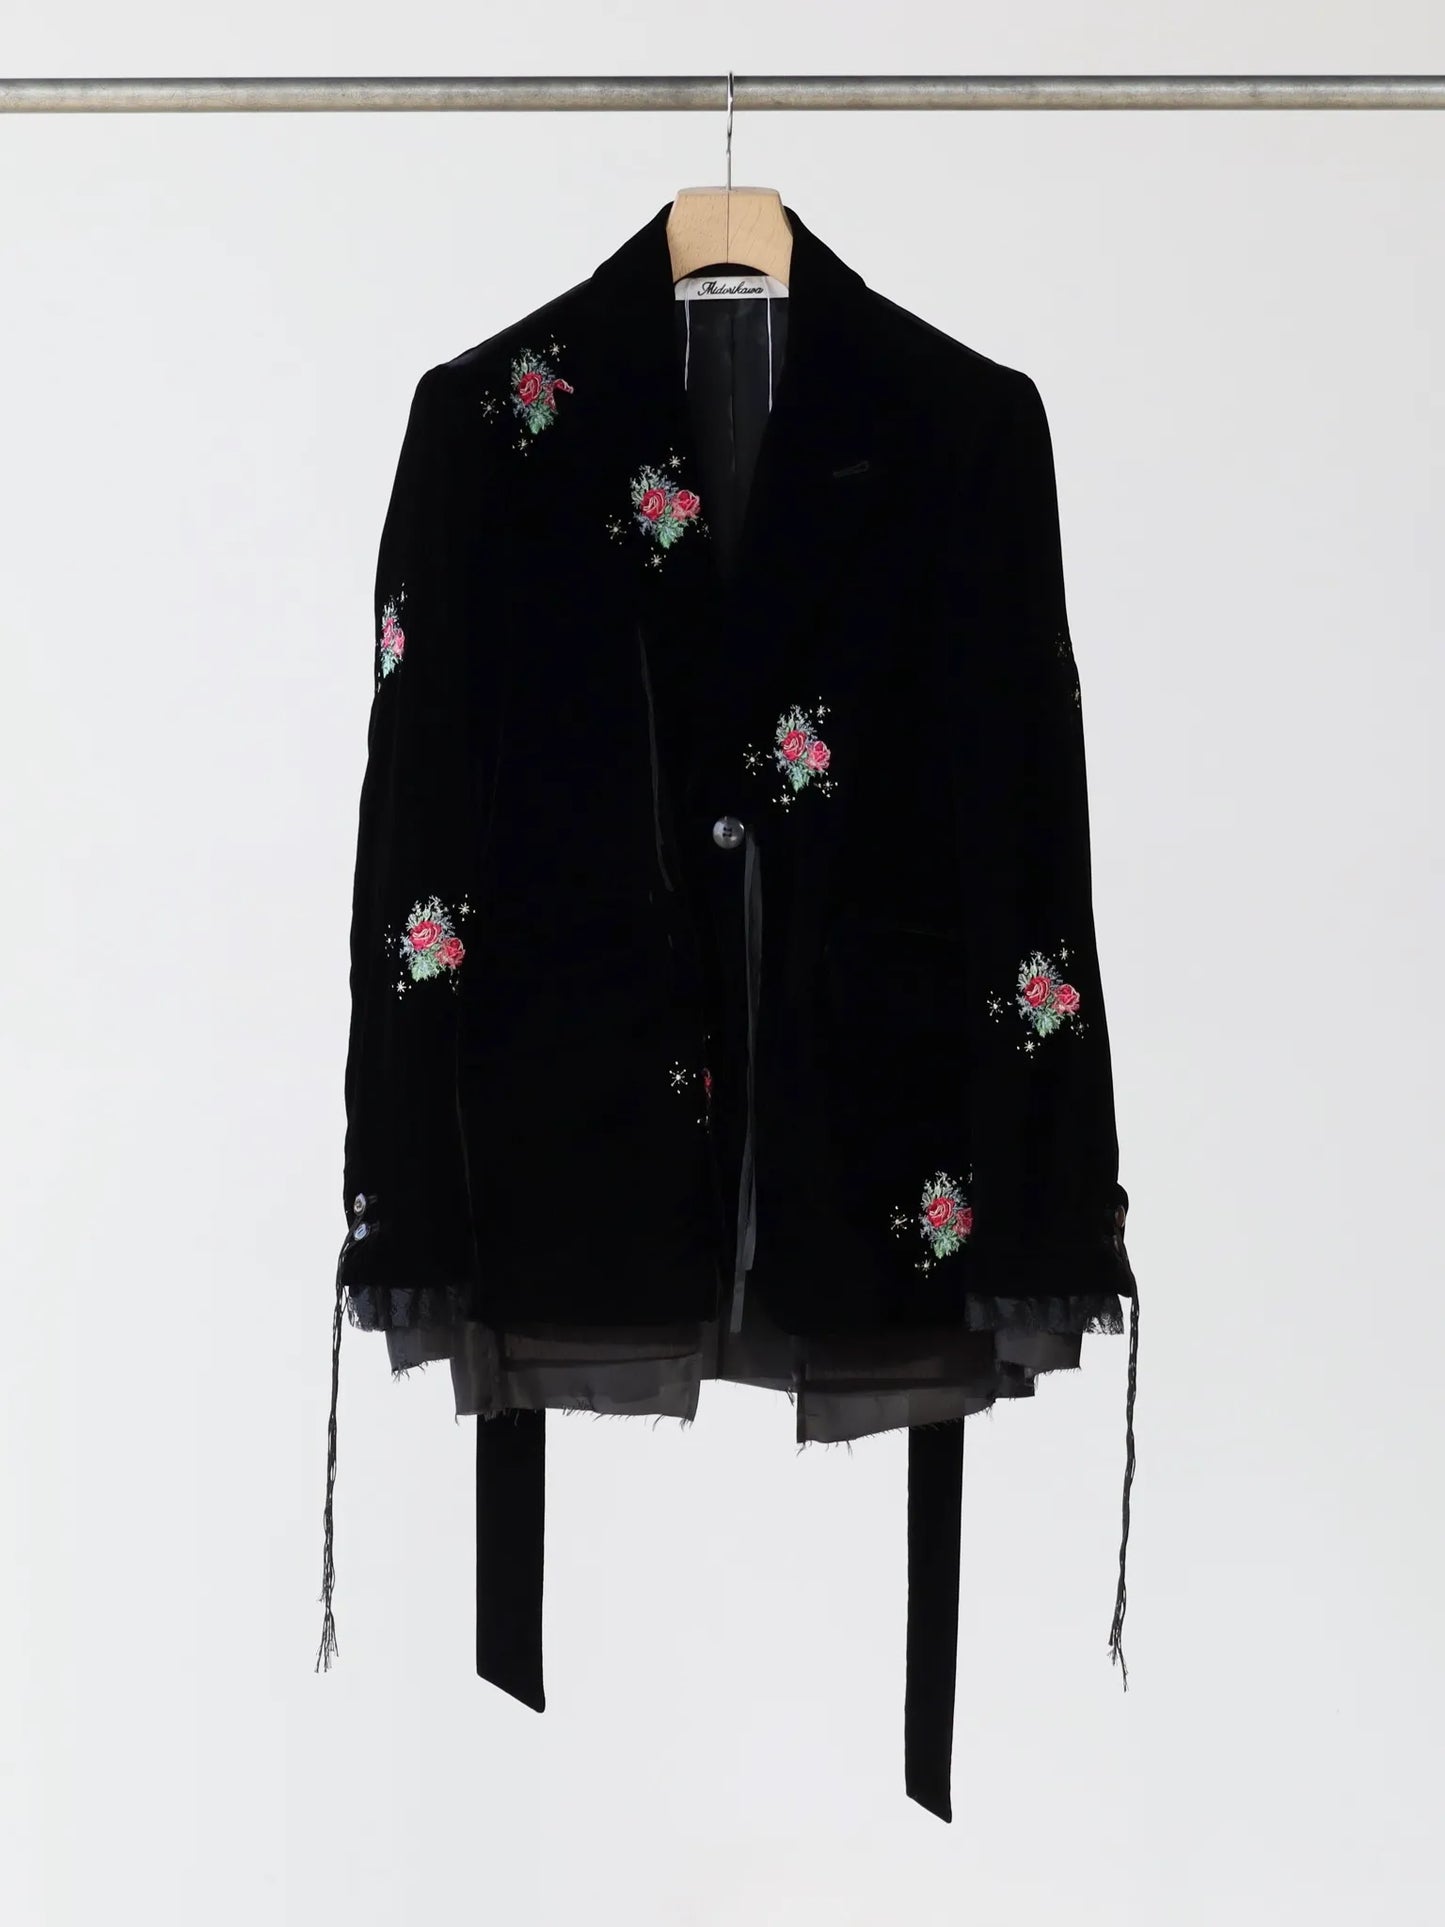 midorikawa-velvet-embroidery-jacket-black-embroidery-1